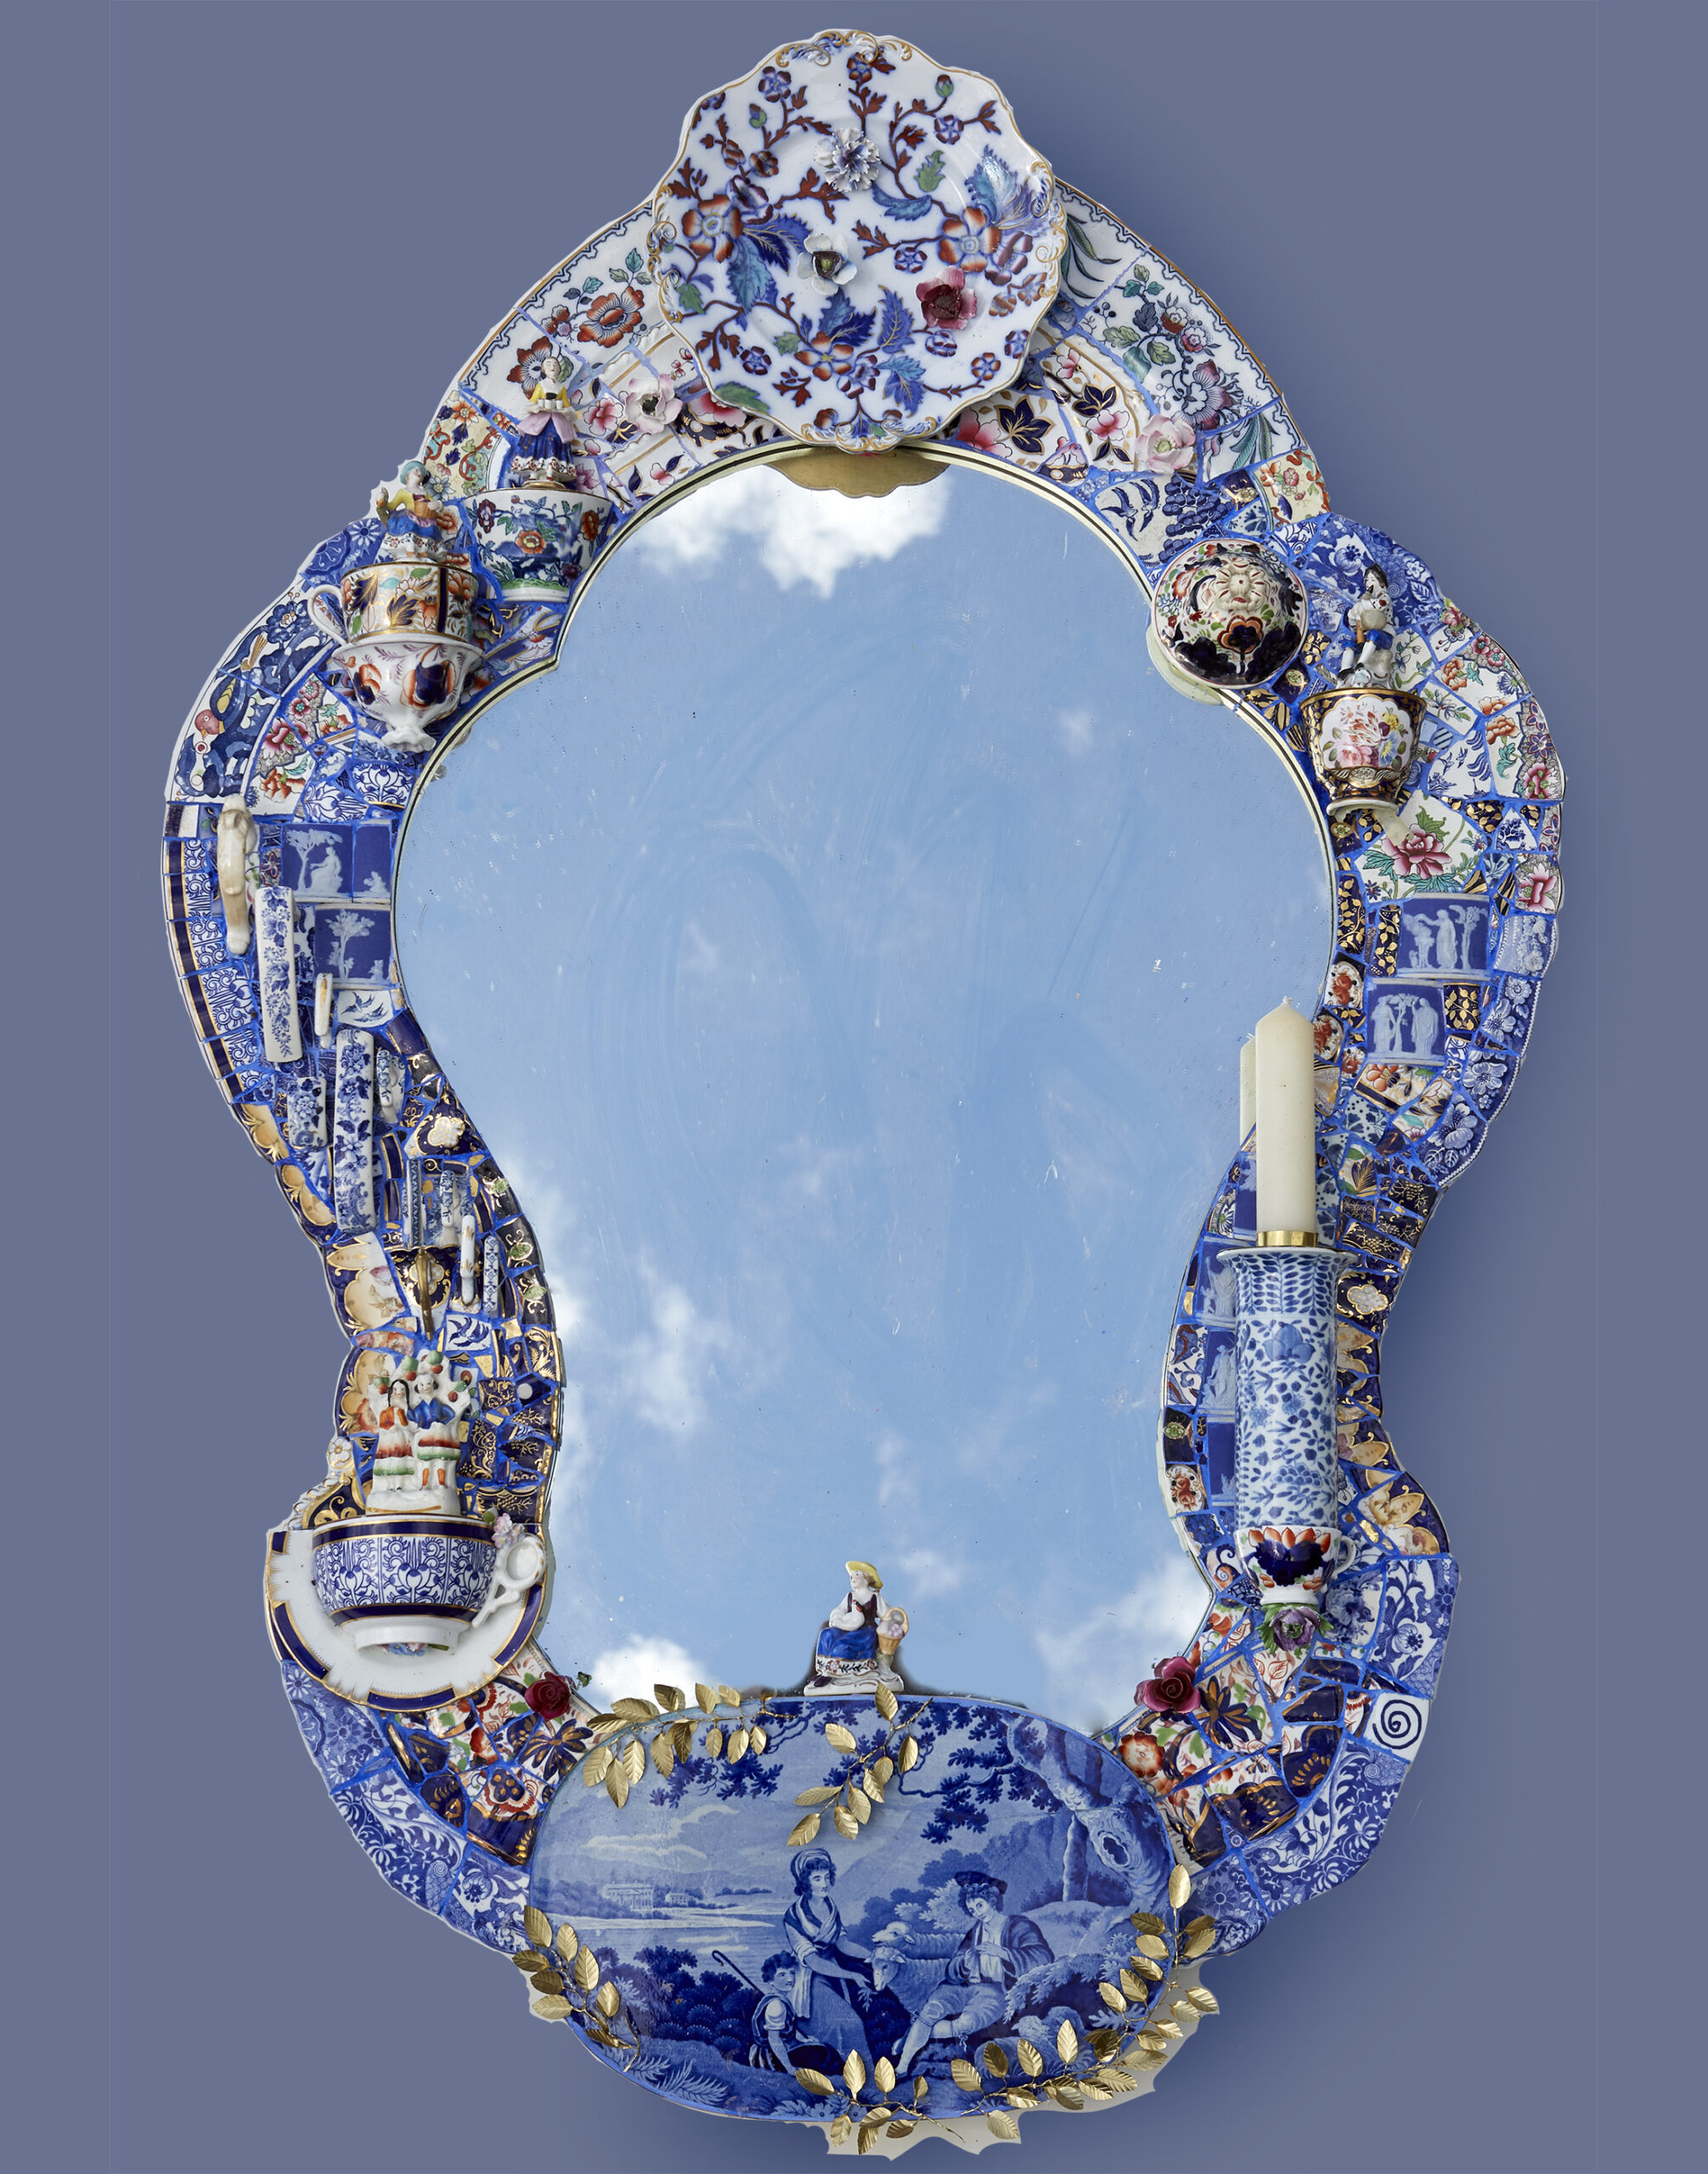 Candace Bahouth, Rhapsody in Blue Mirror, 2023